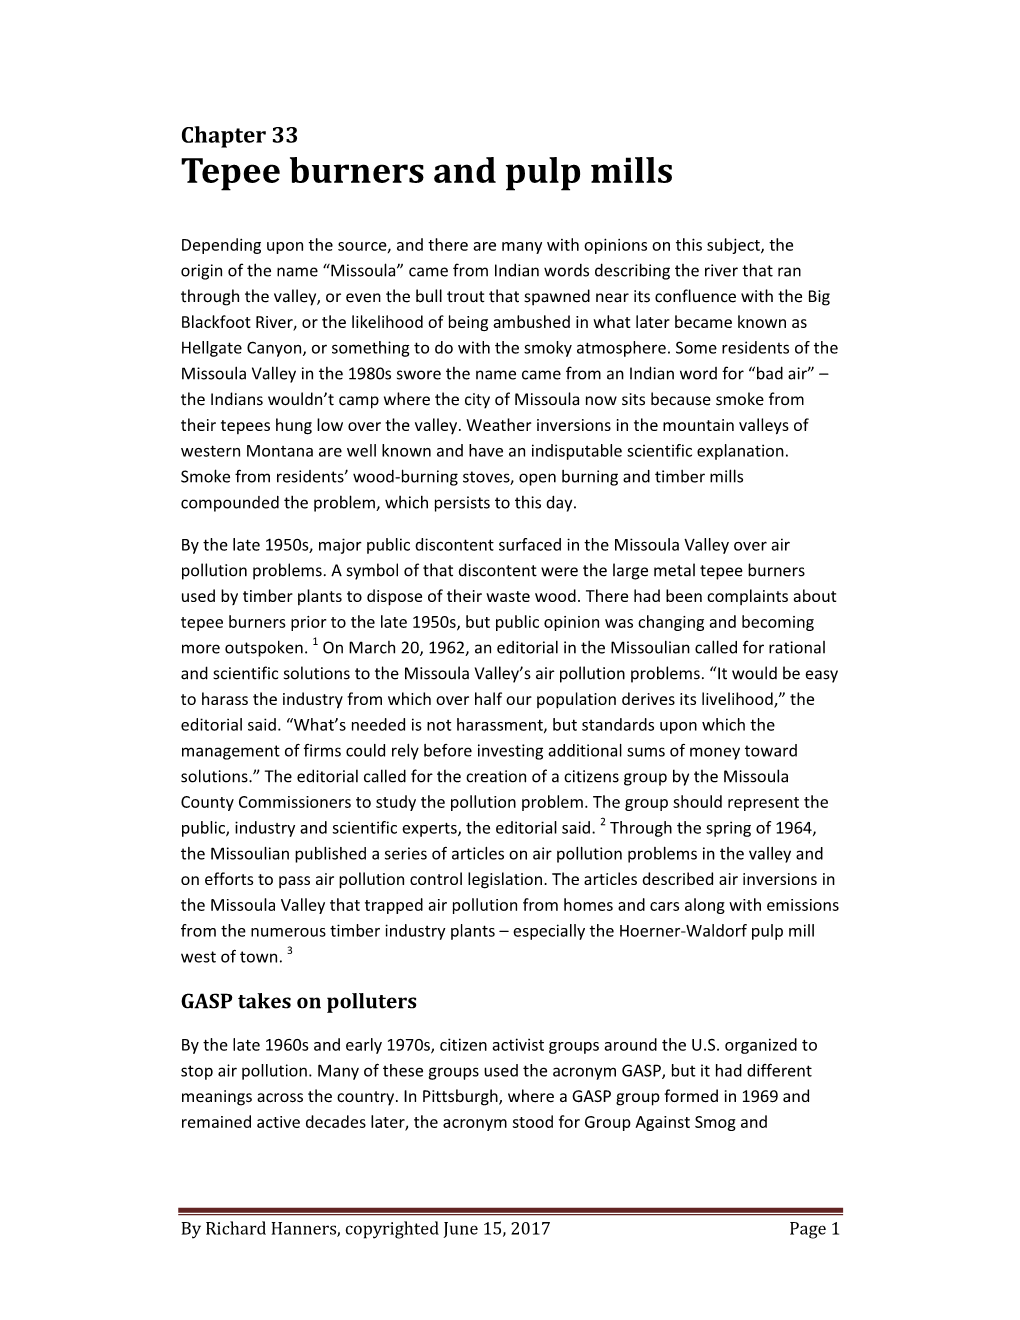 Tepee Burners and Pulp Mills